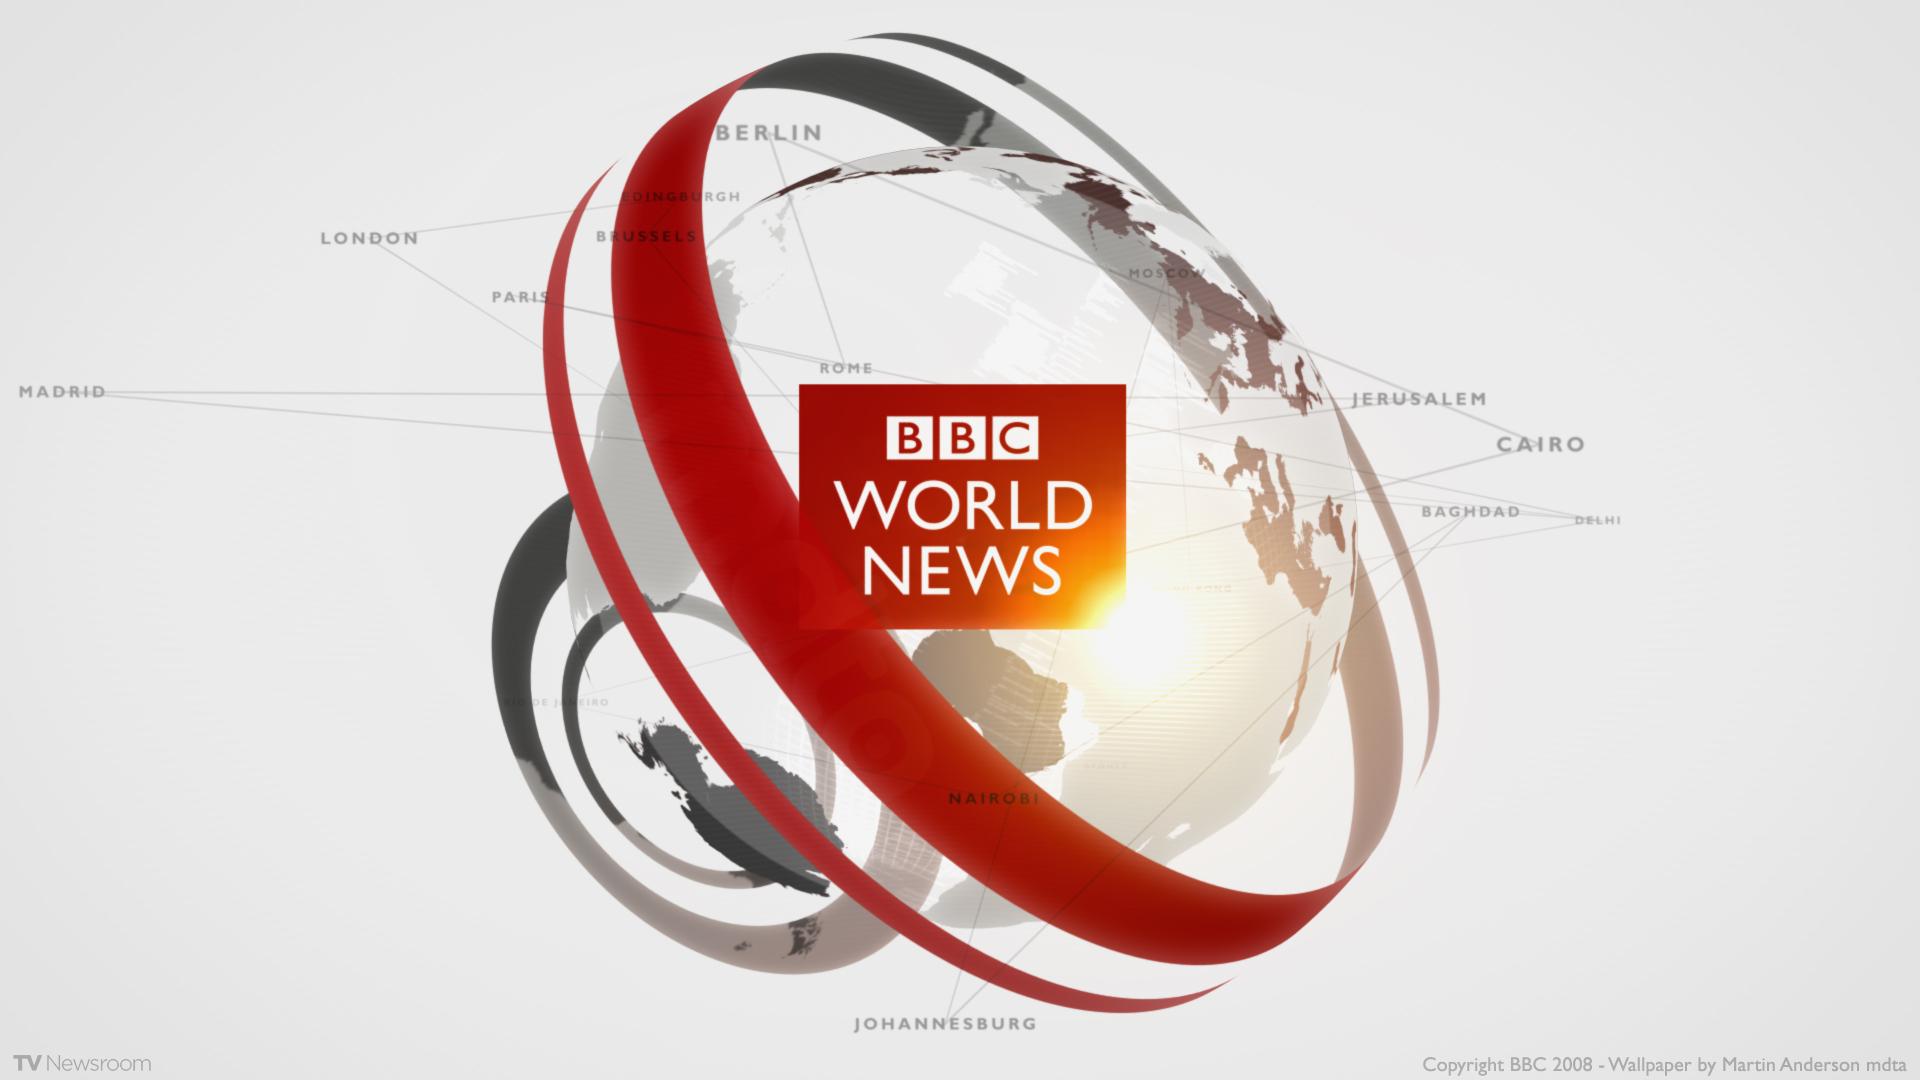 Download the BBC World News Wallpaper, BBC World News iPhone